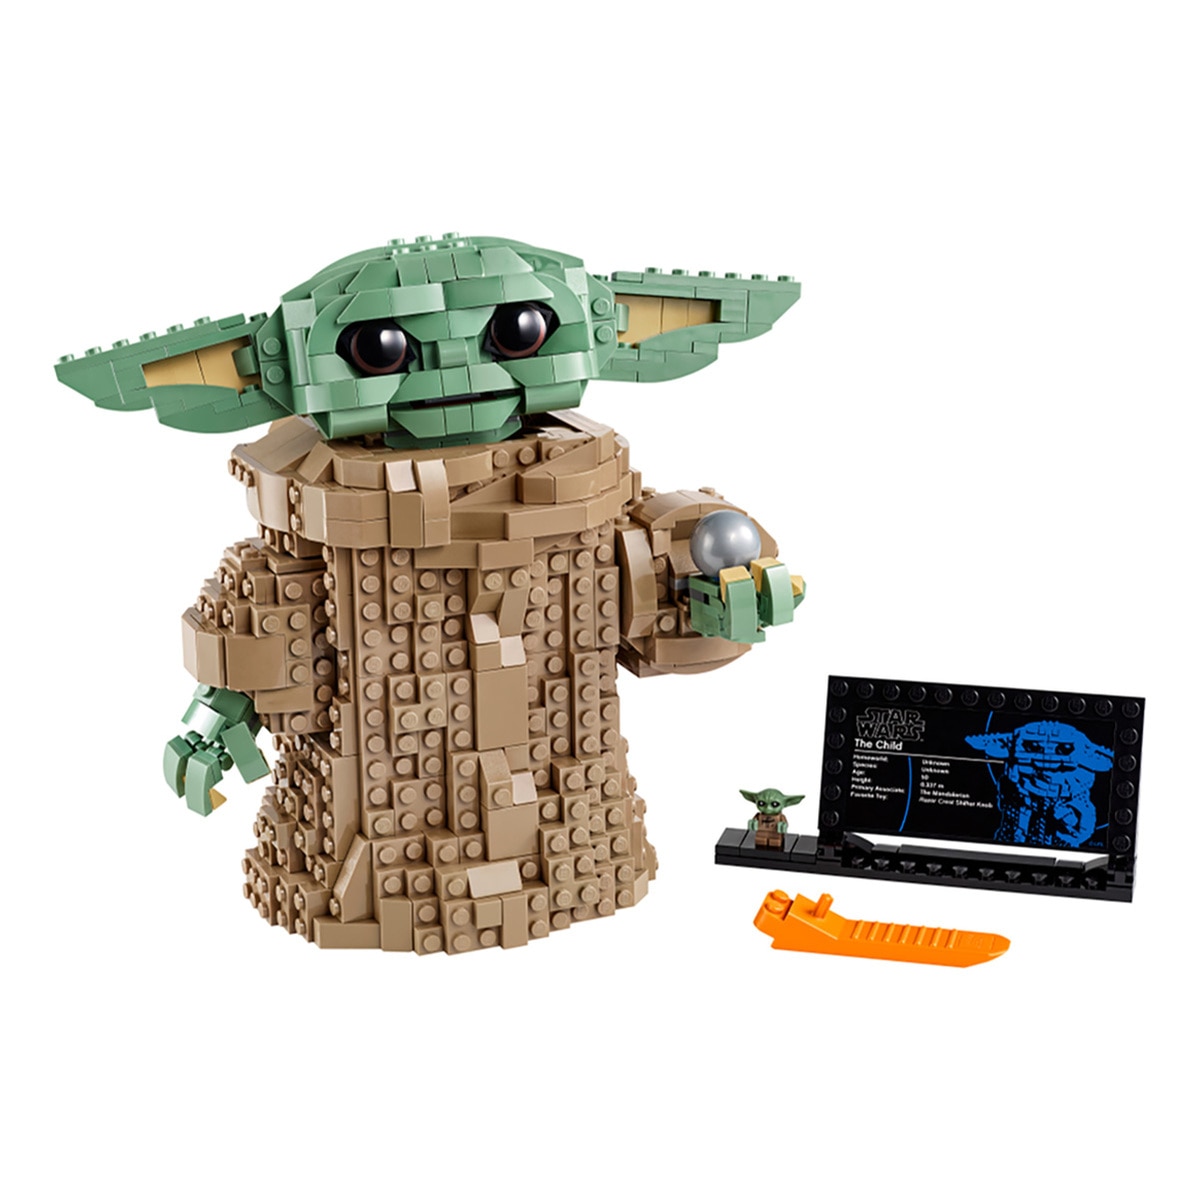 Lego® Star Wars "The Child"